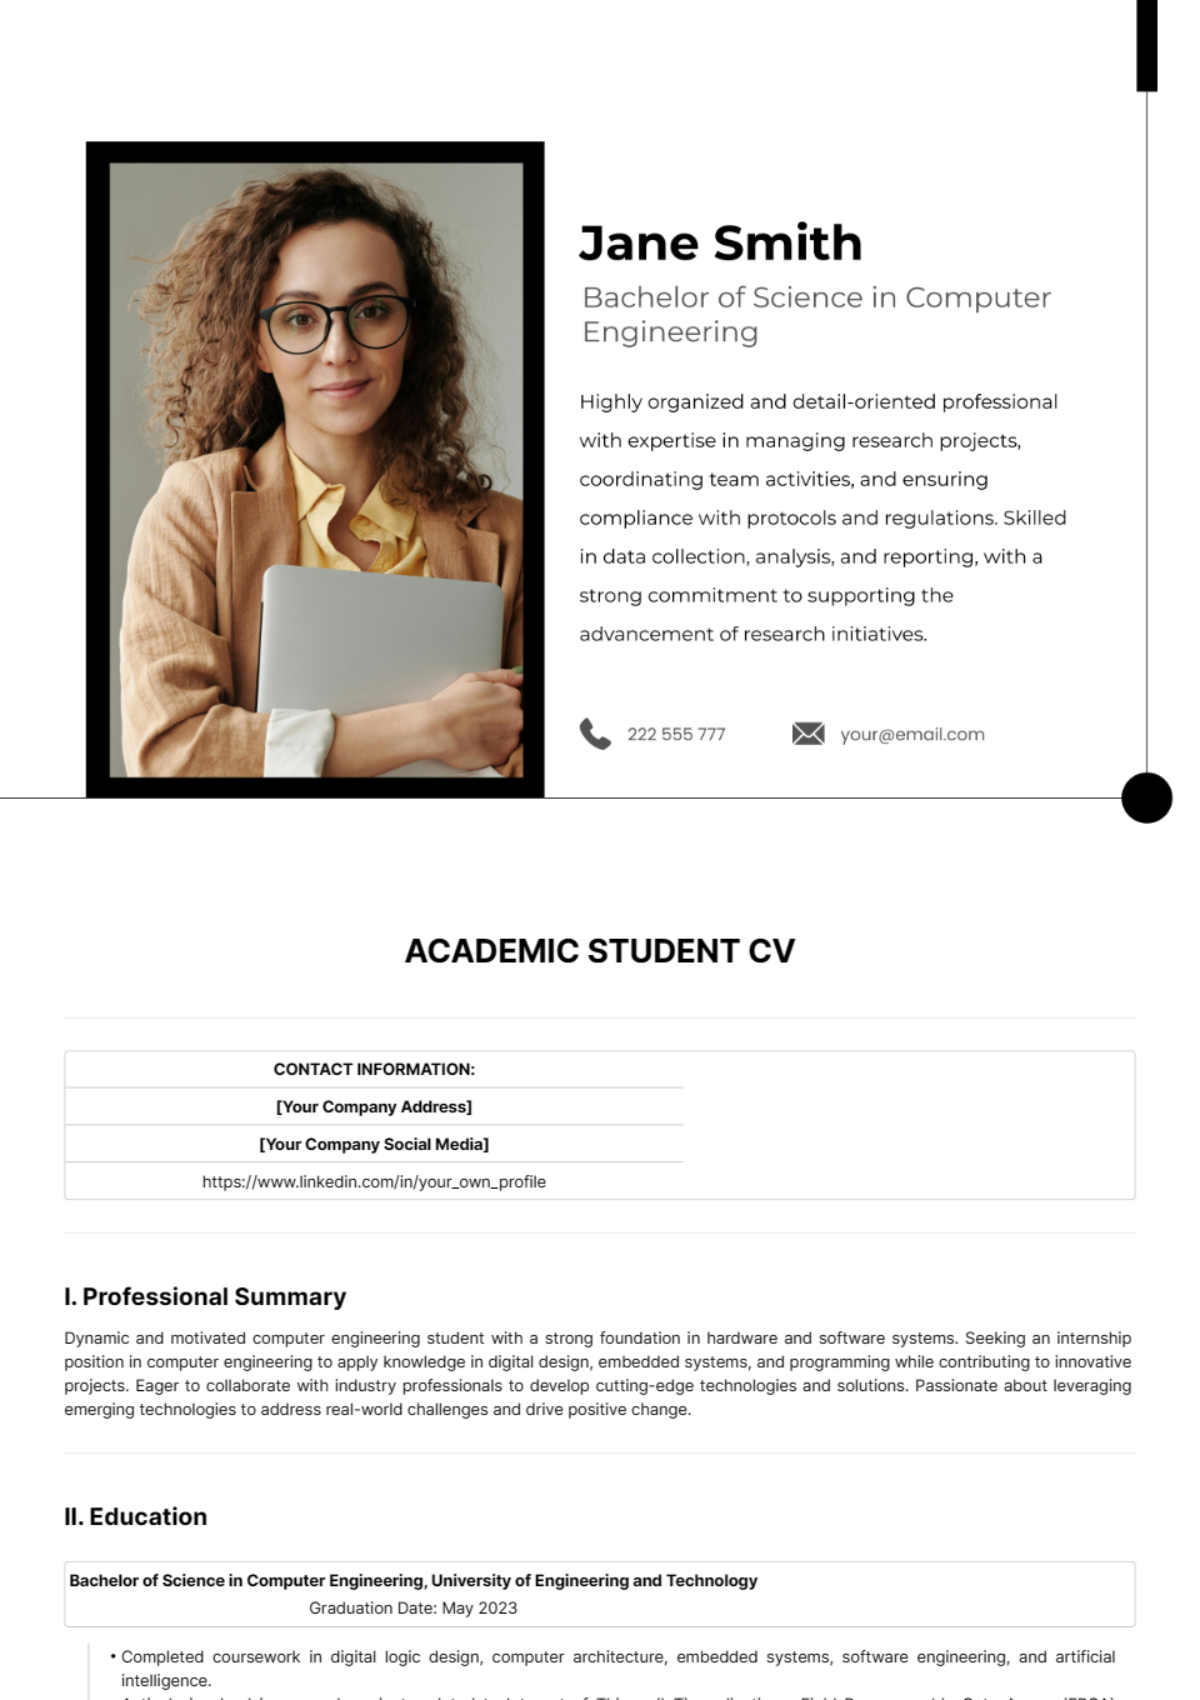 Free Academic Student CV Template